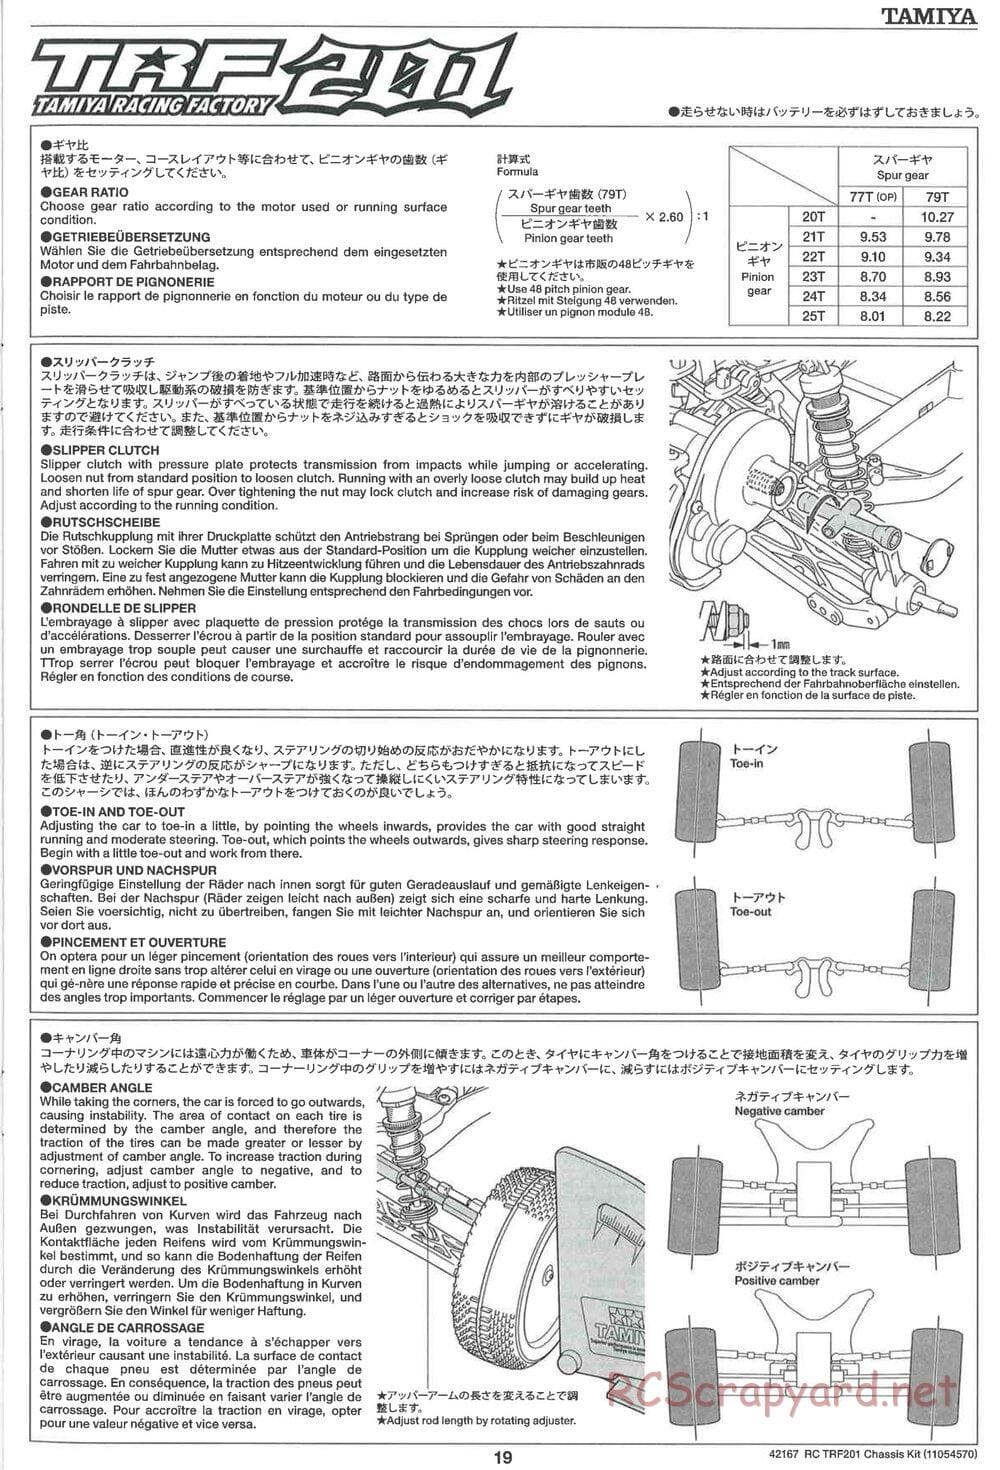 Tamiya - TRF201 Chassis - Manual - Page 19